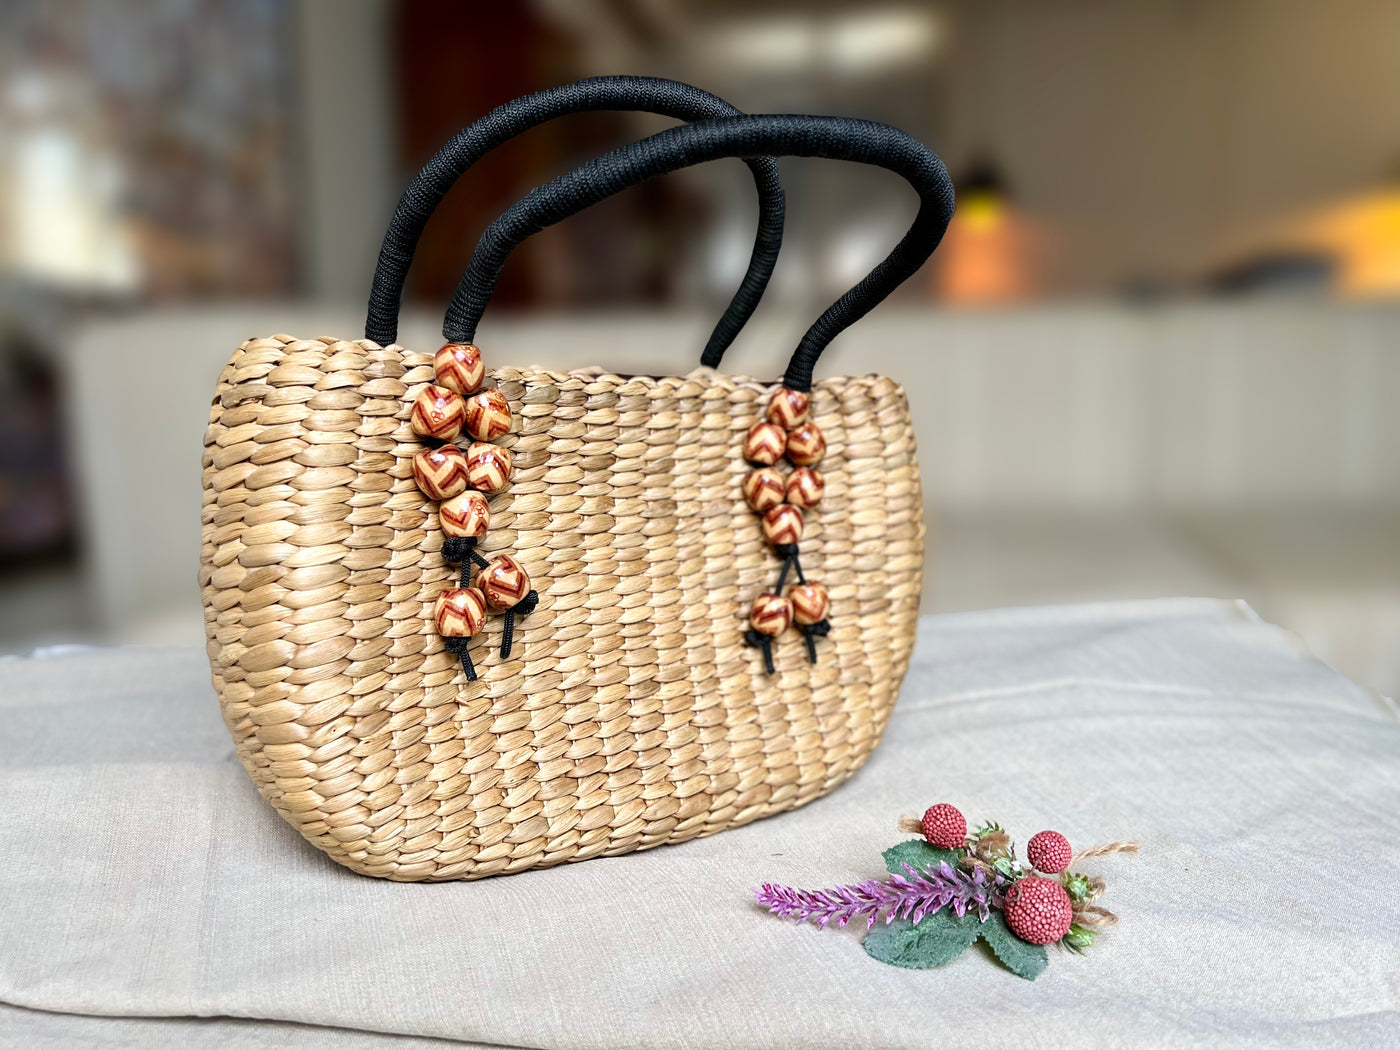 Crafts create Kauna Grass Bag - YouTube